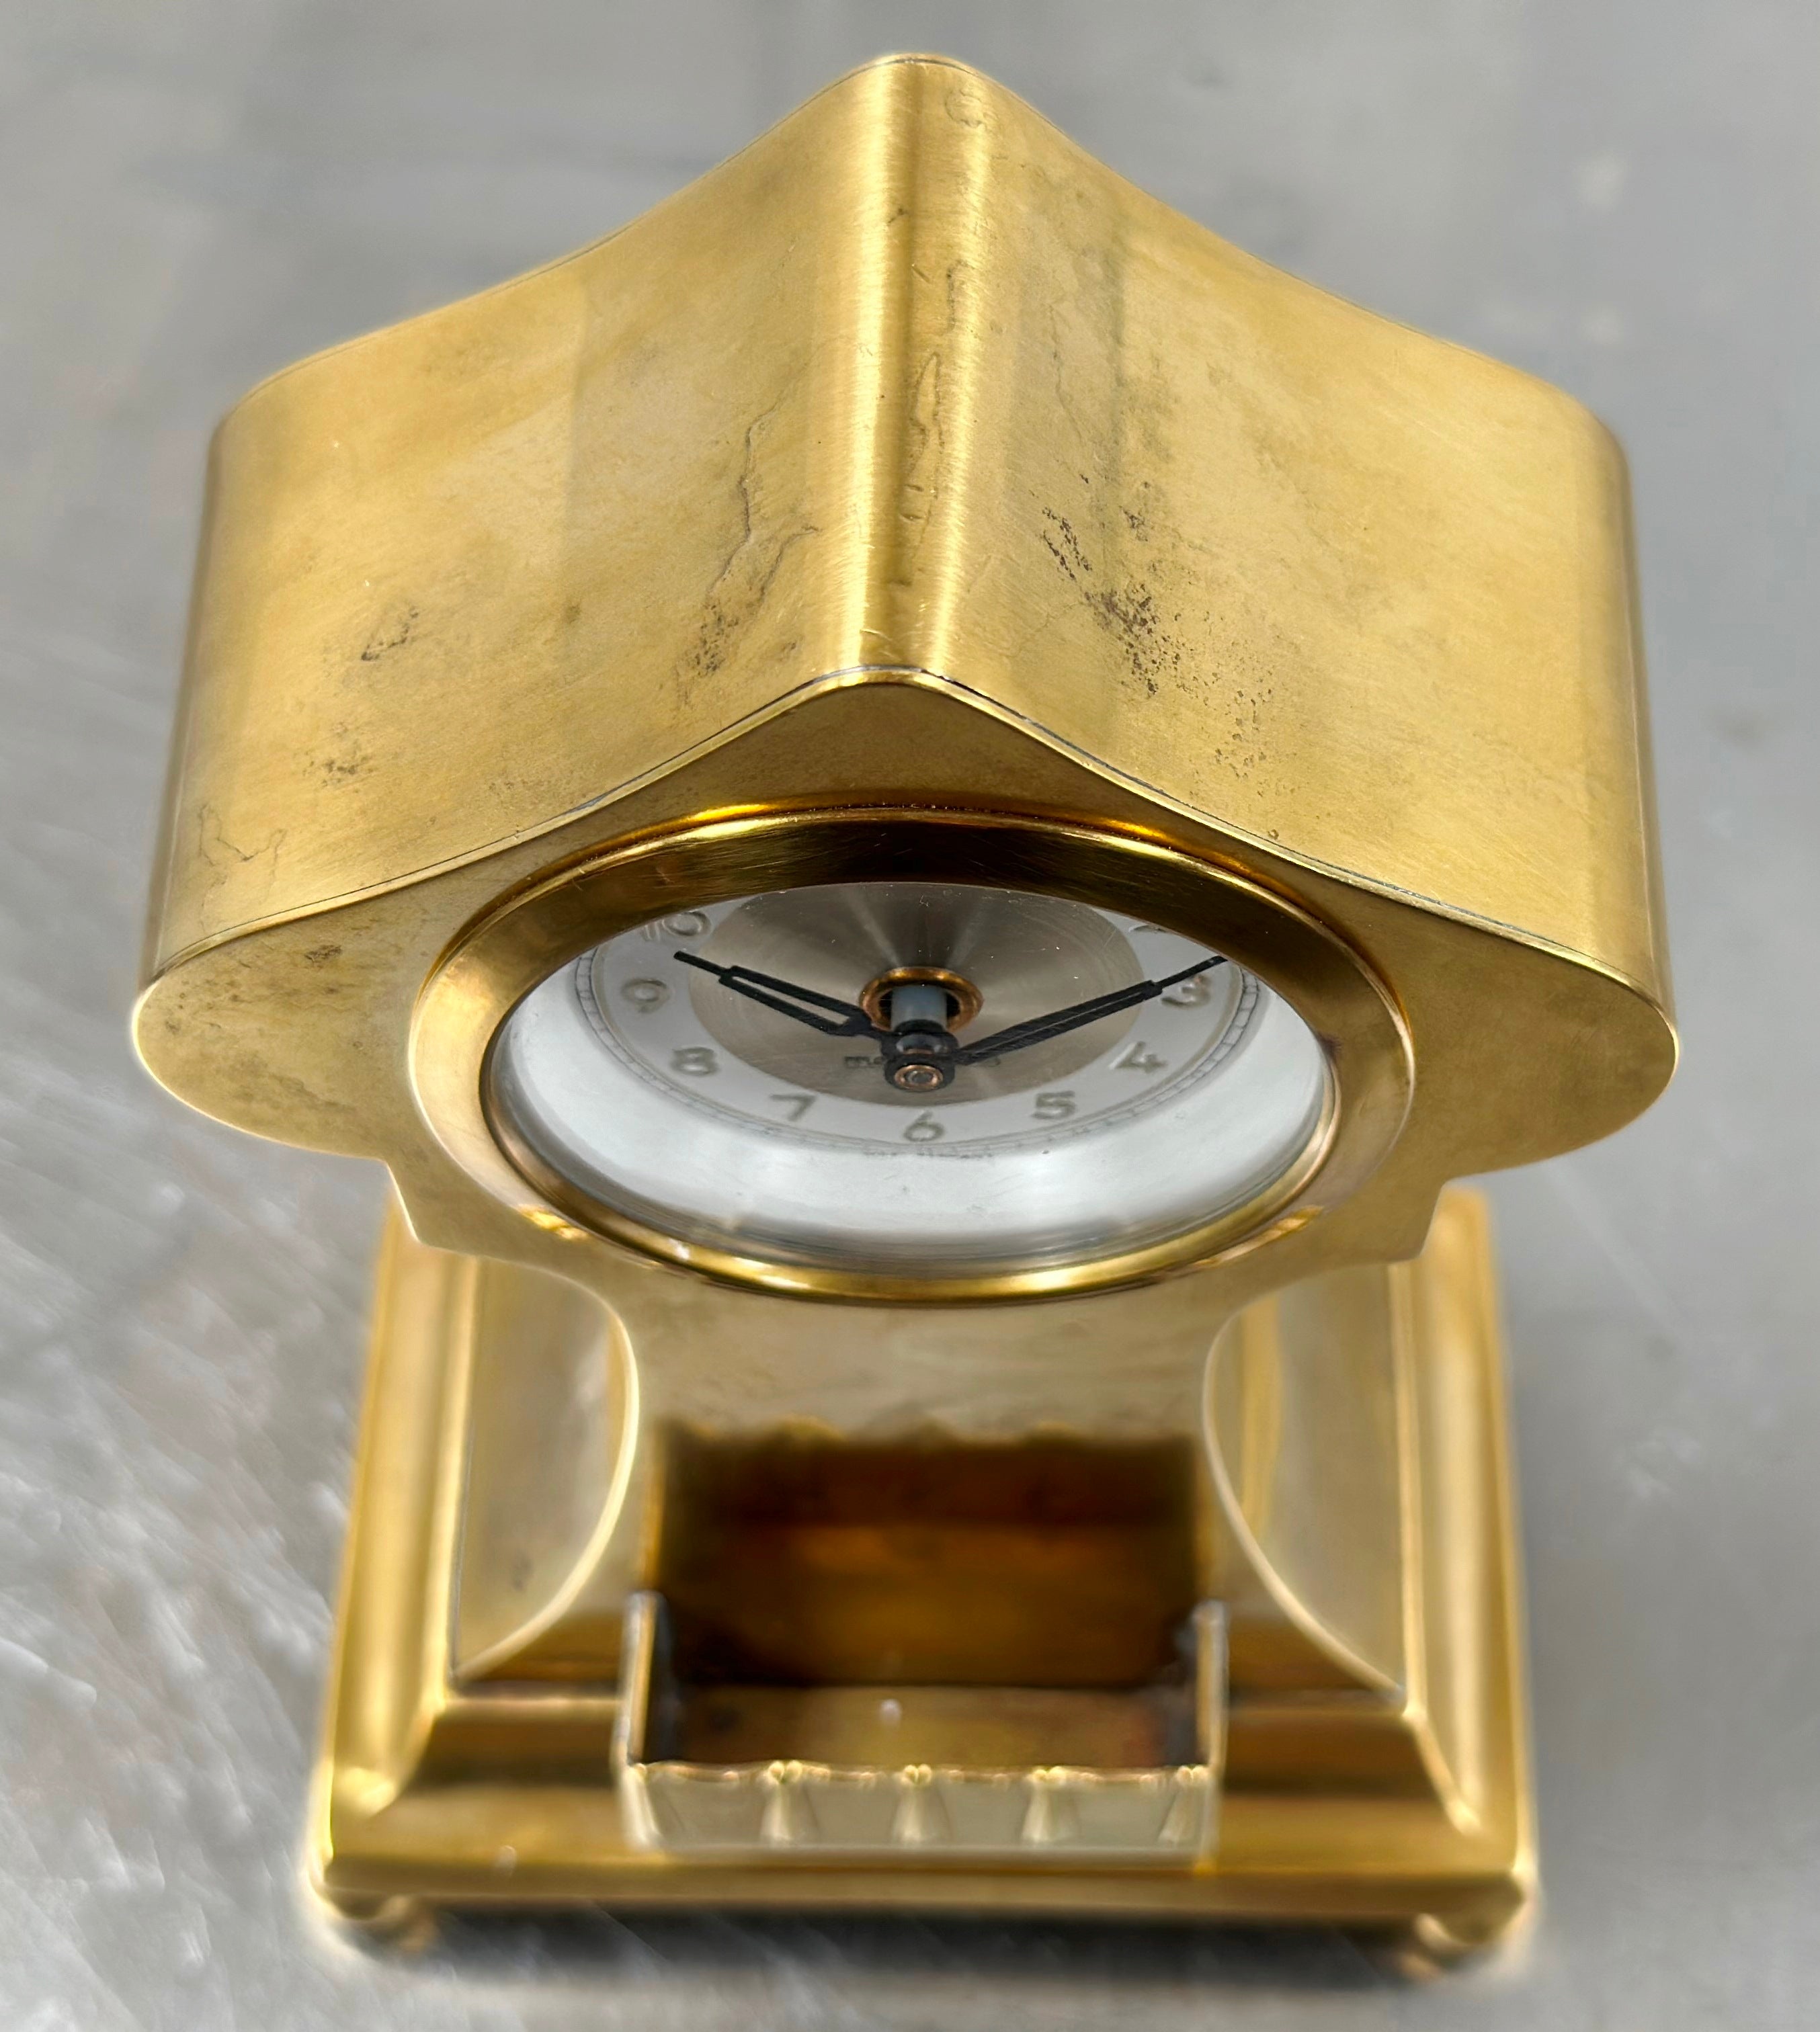 Vintage Art Nouveau Brass Mercedes German Mantel Clock | Adelaide Clocks